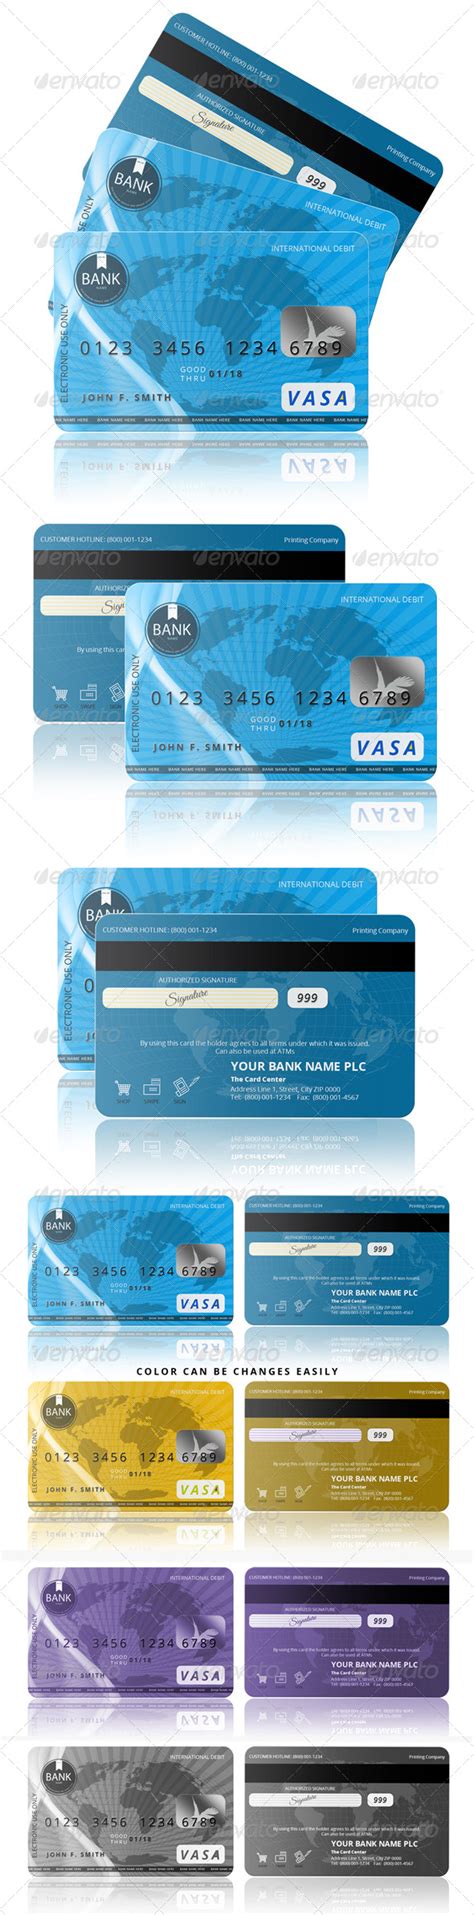 Credit Card Template Psd